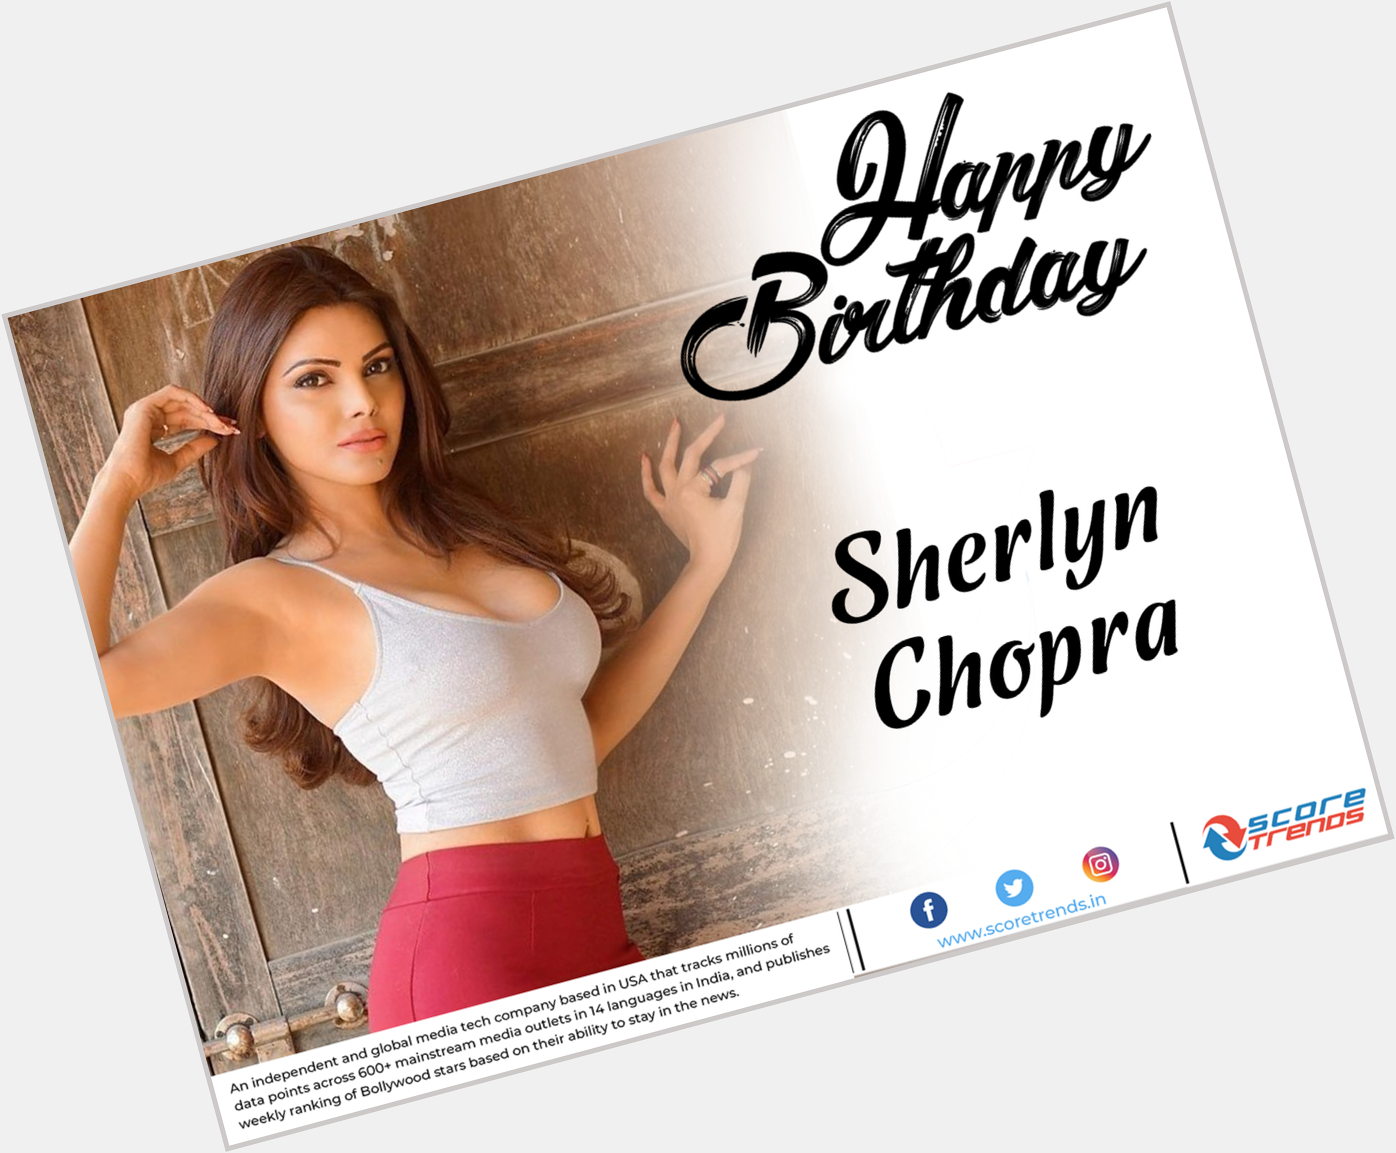 Score Trends wishes Sherlyn Chopra a Happy Birthday!! 